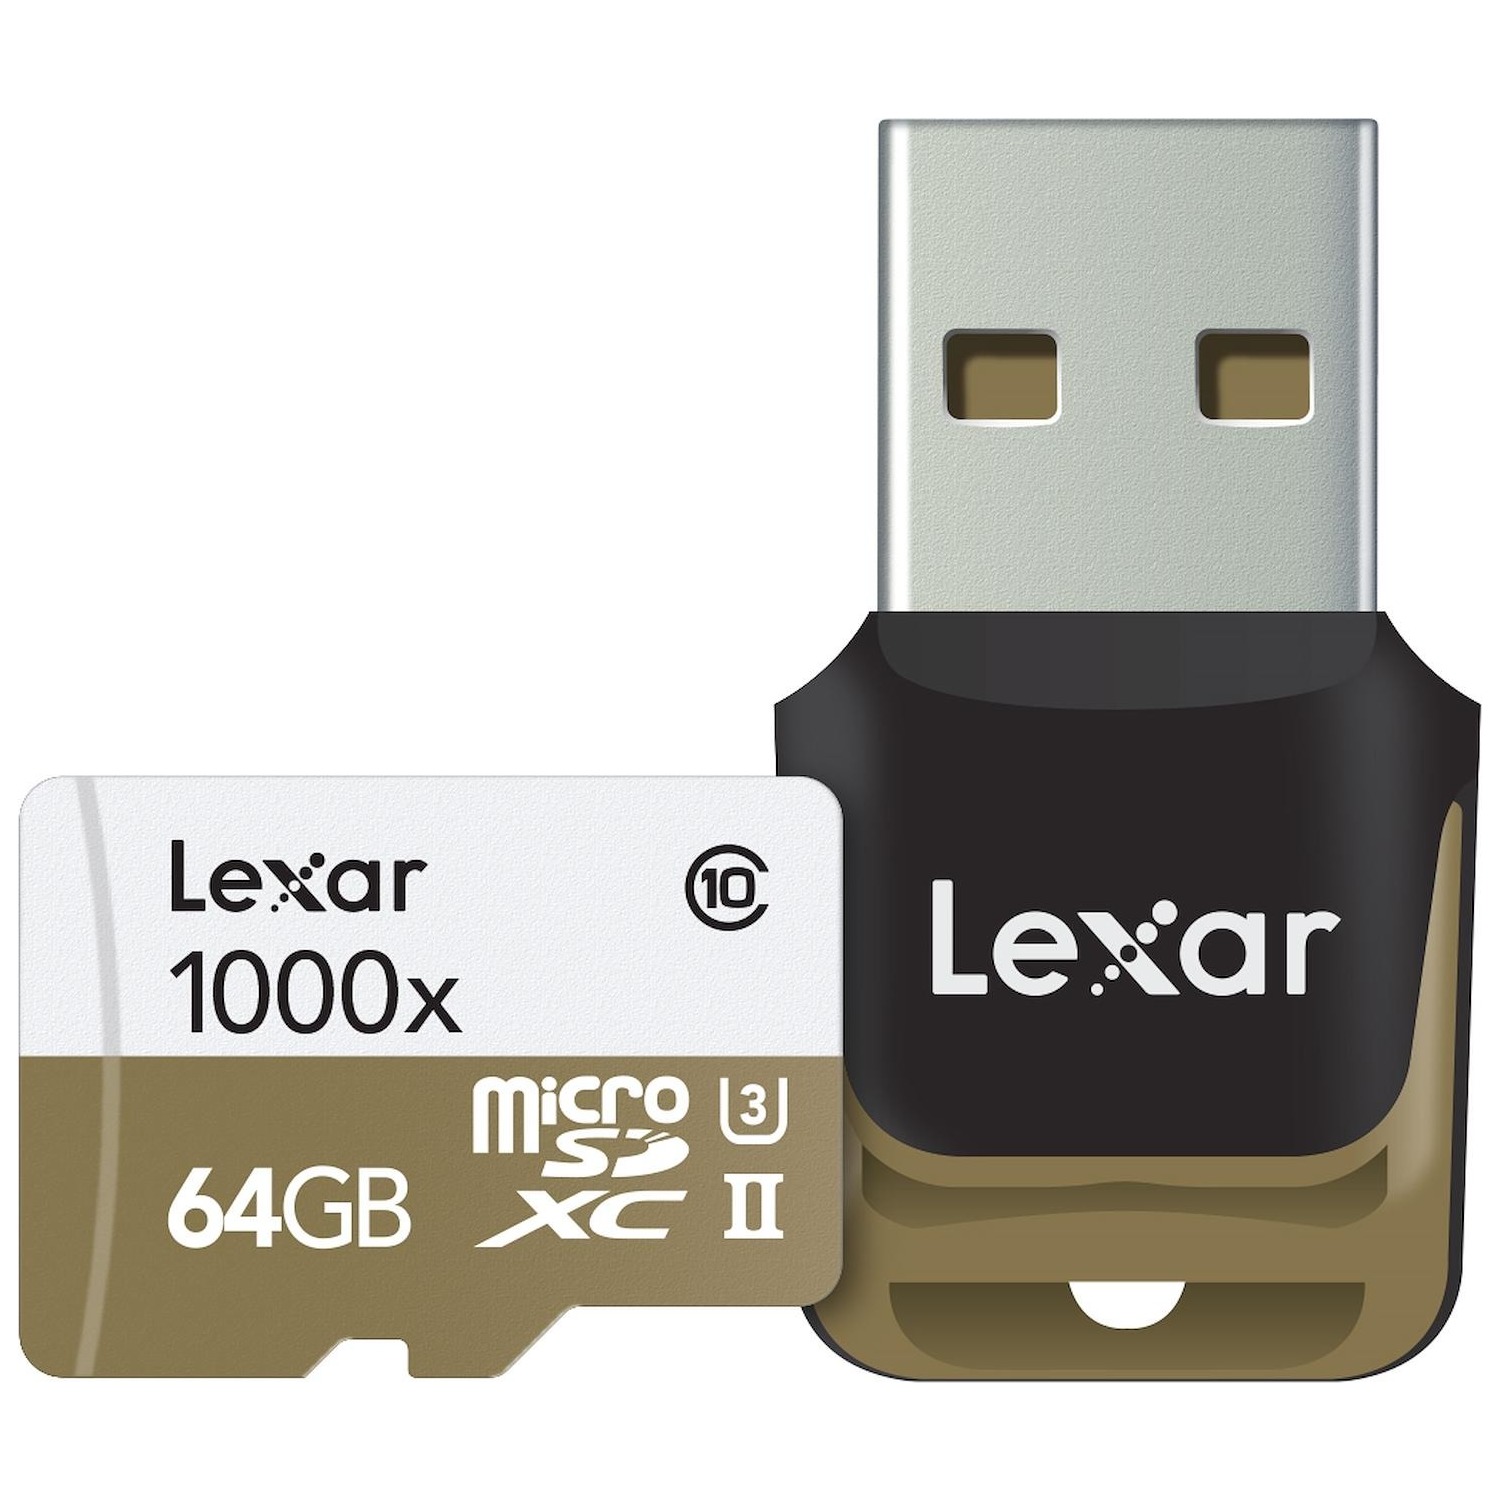 Immagine per MicroSD Lexar 64 GB da DIMOStore